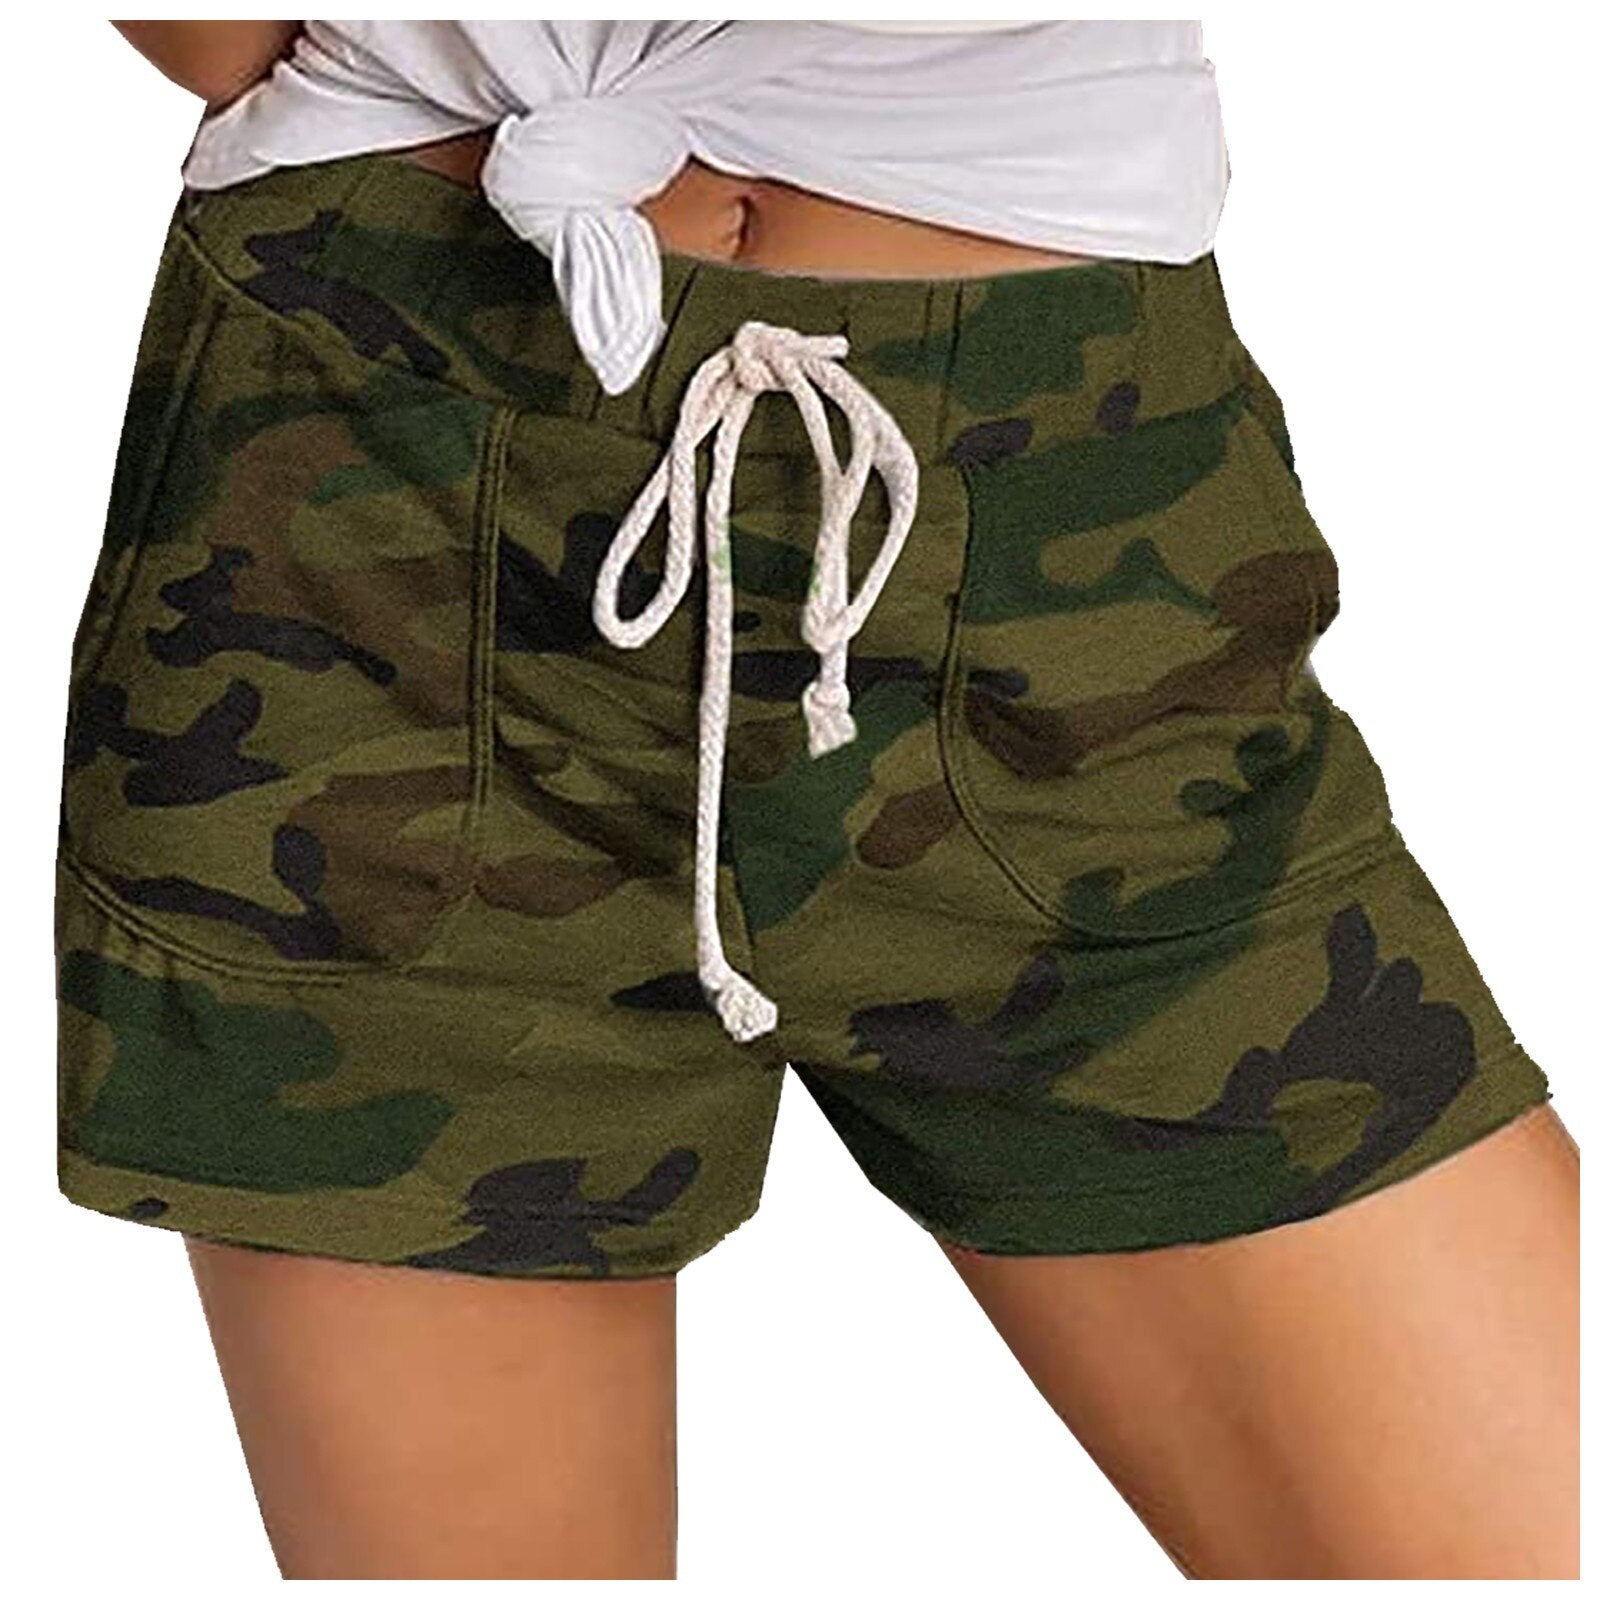 Pantalones corte militar para mujeres